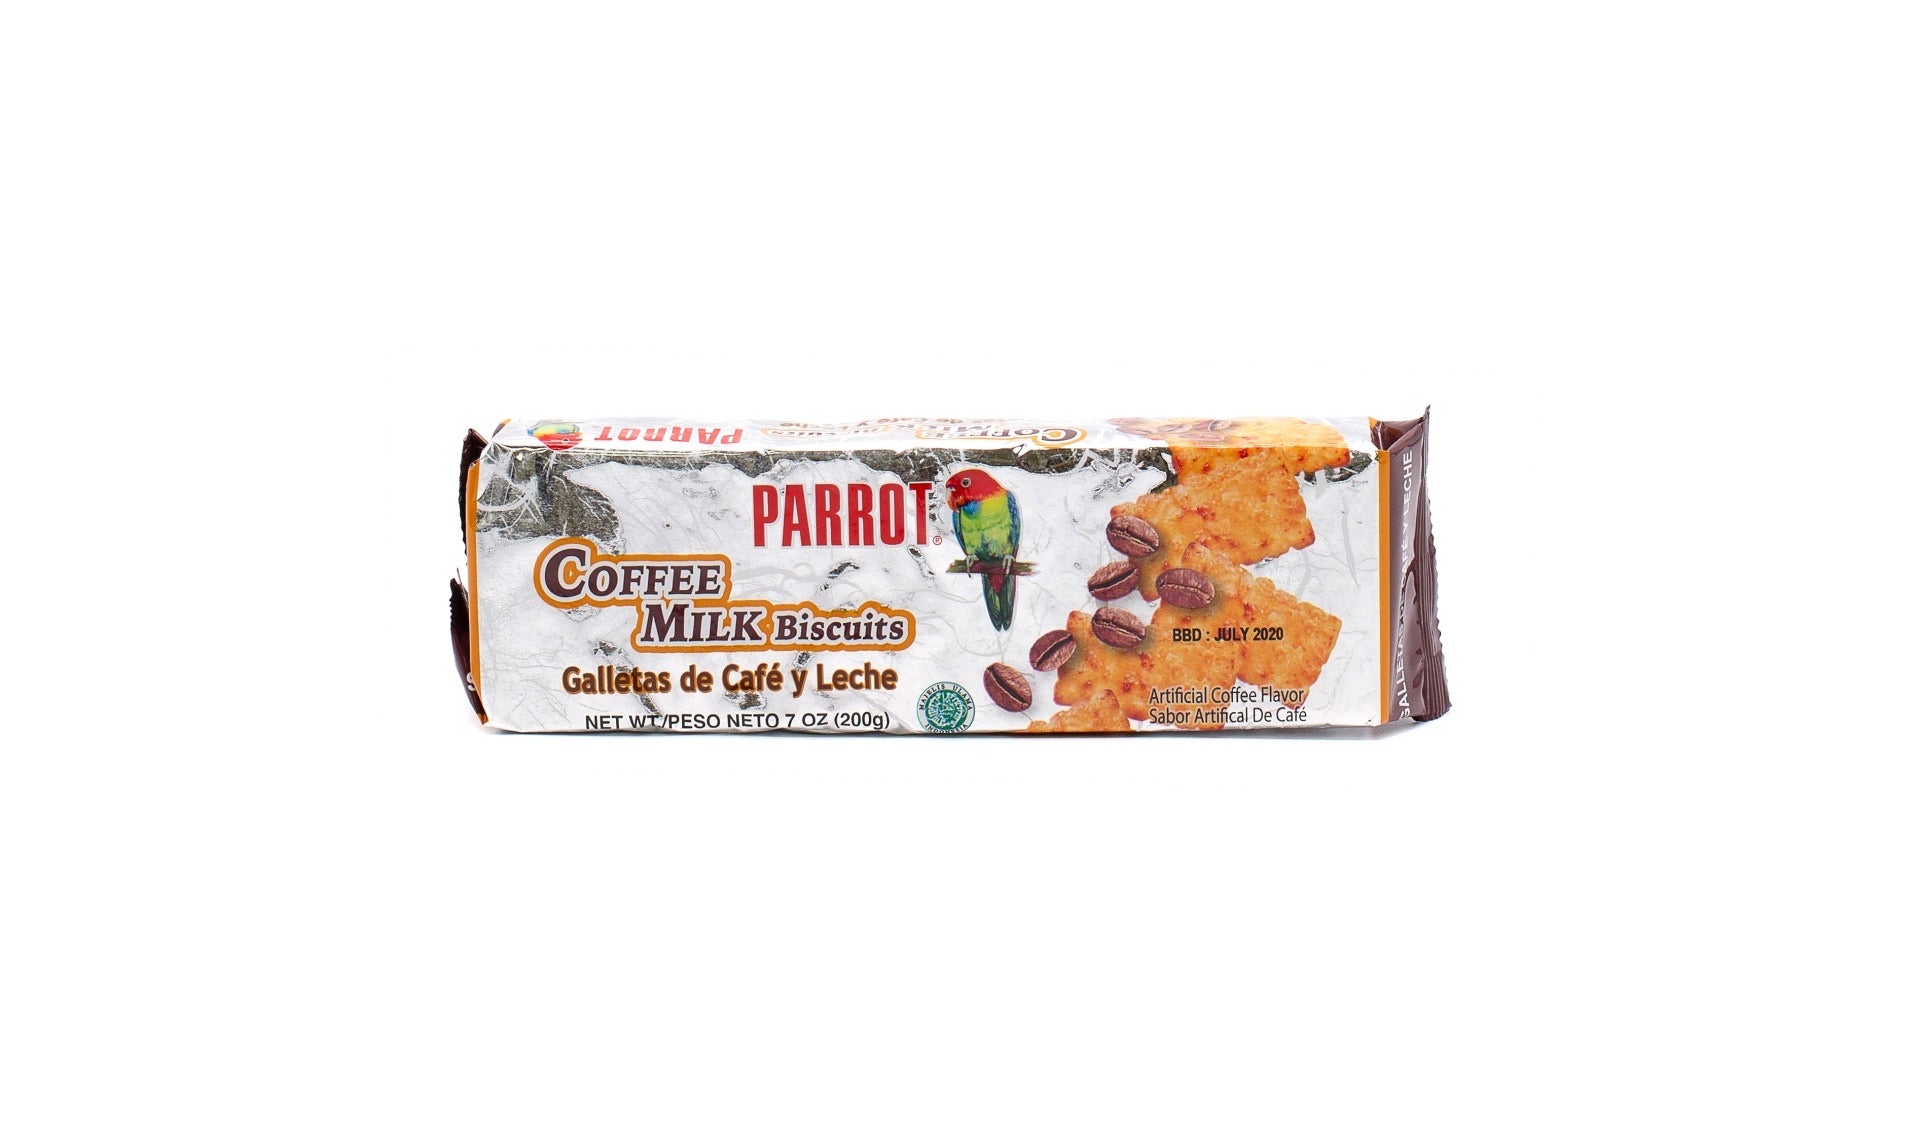 Parrot Coffee Milk Biscuits - 200g/7oz